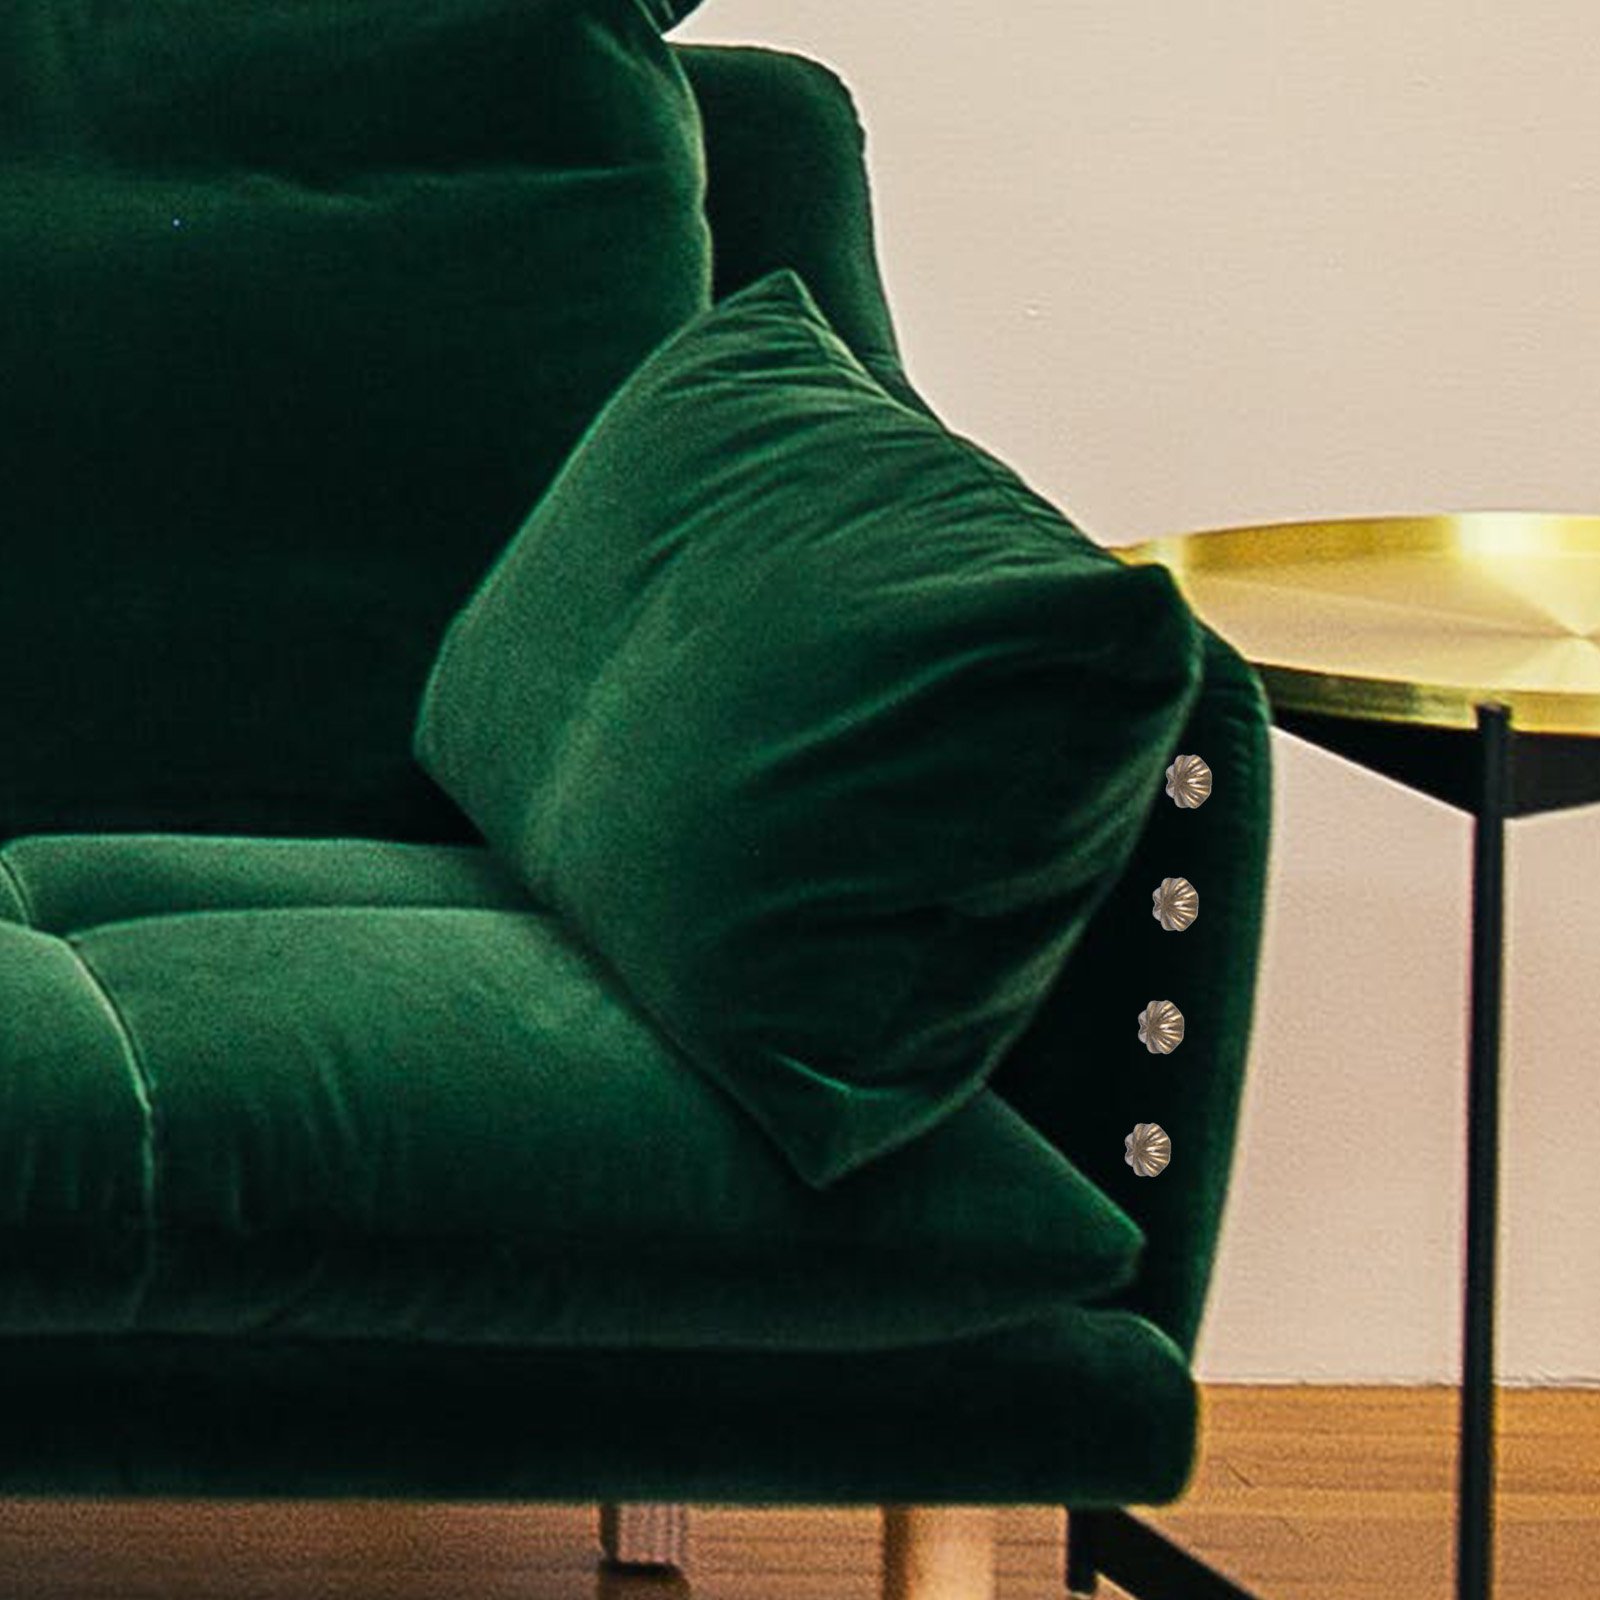 100 Pcs Furniture Decorative Nails Upholstery Tack for Decoration Tacks Iron Heads Sofa